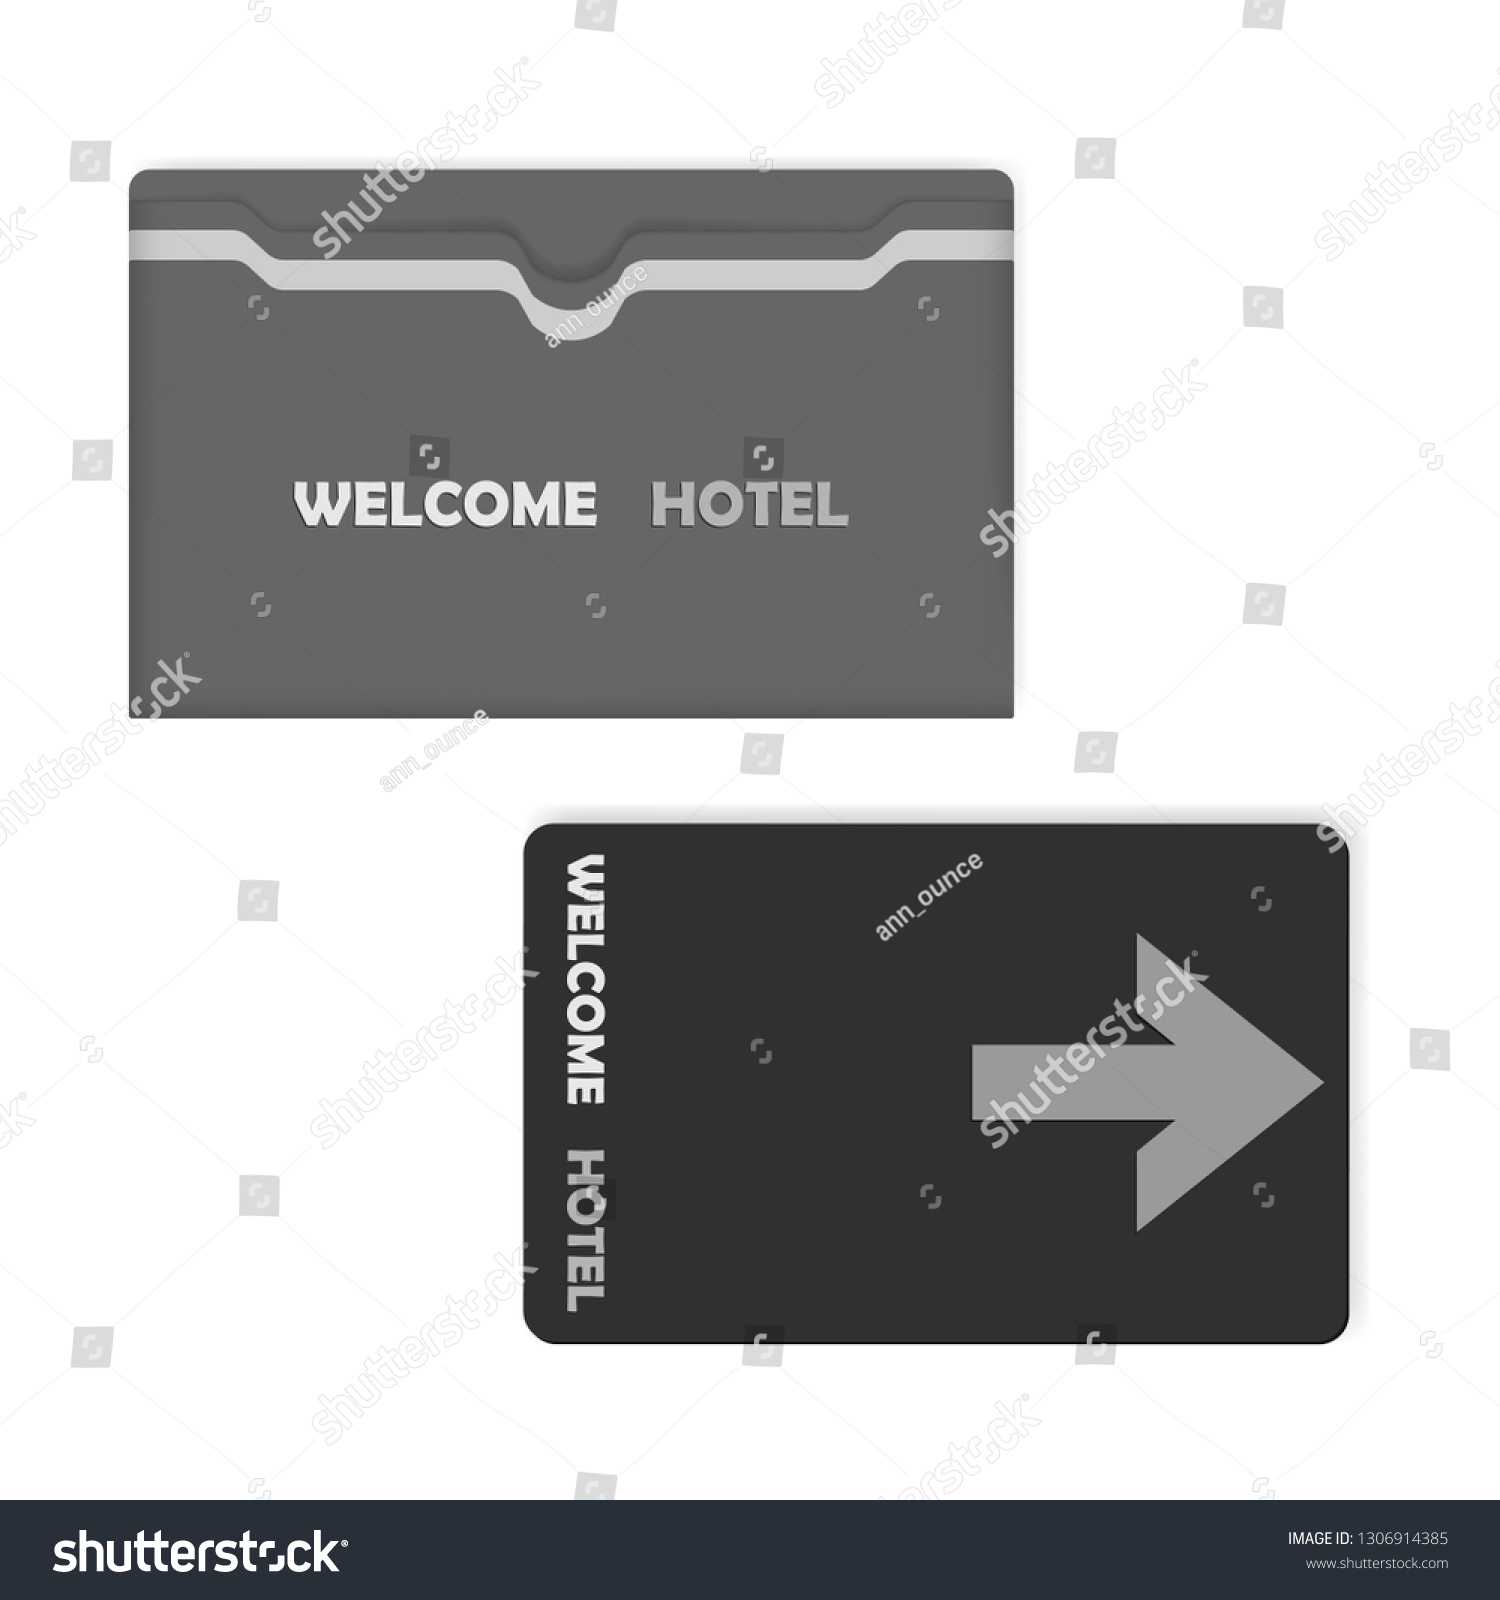 Стоковая Векторная Графика «Hotel Key Card Keycard Sleeve Within Hotel Key Card Template